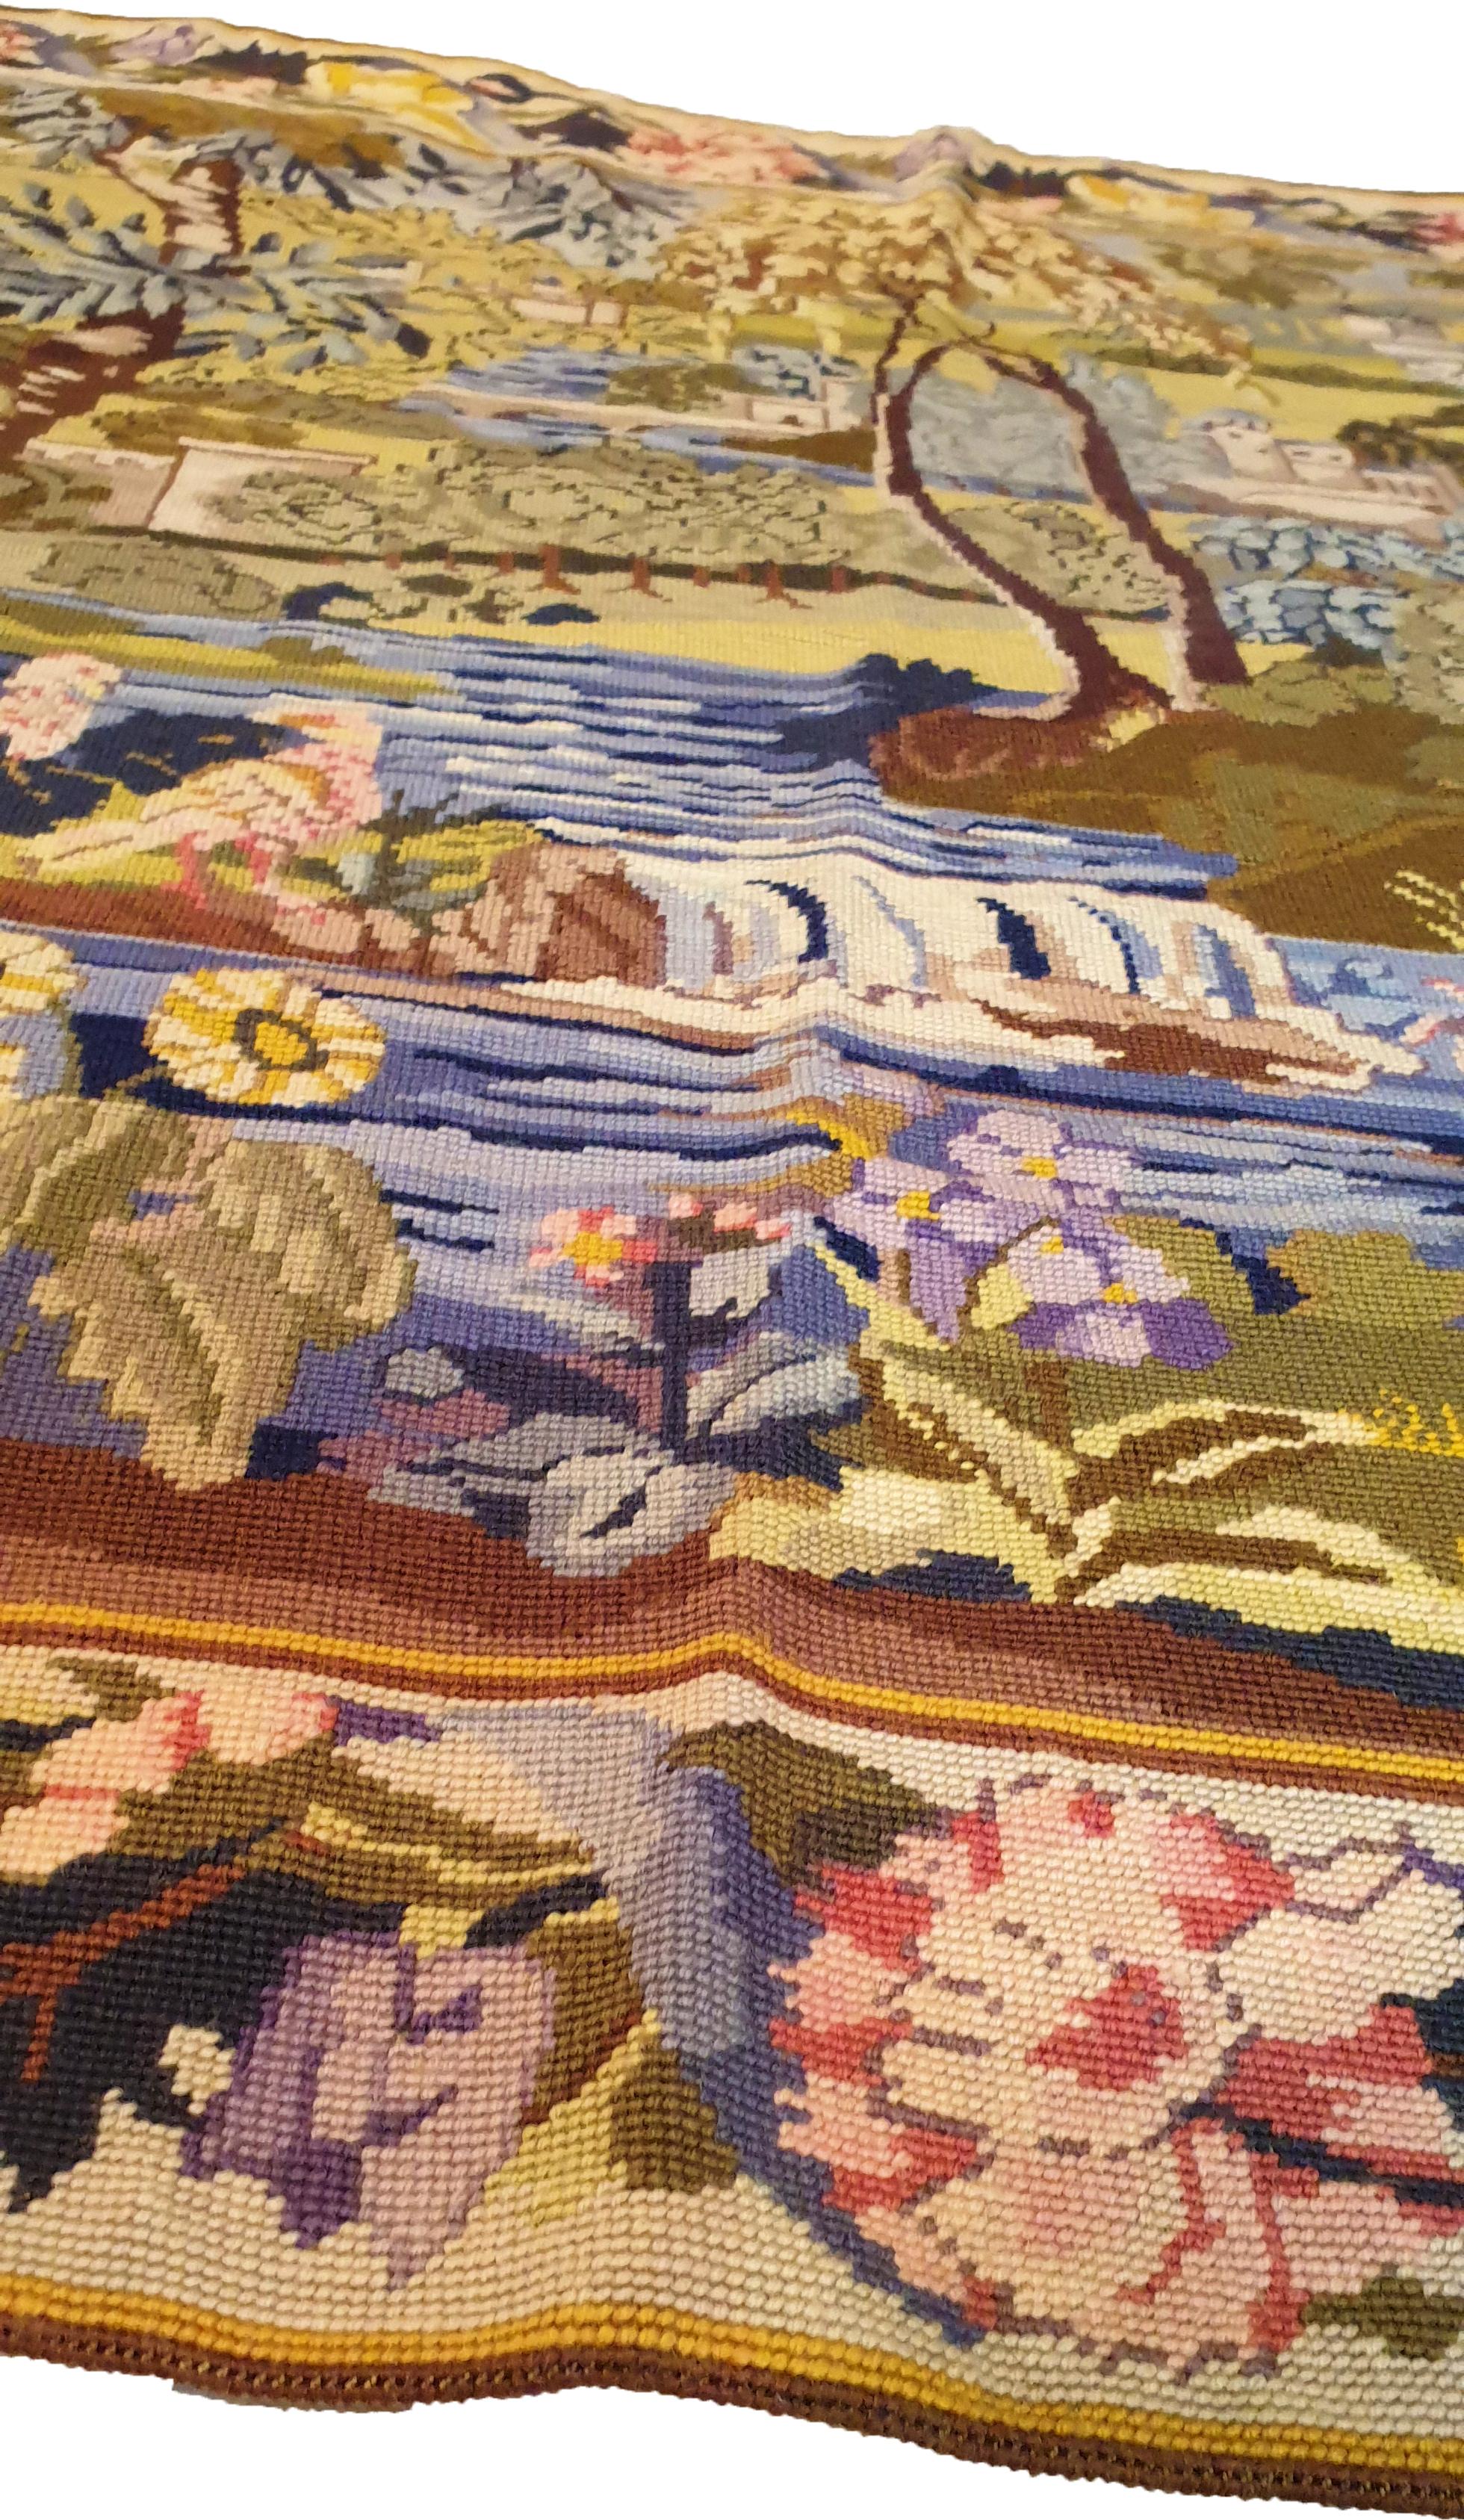 667 - „Au Petit Point“-Textil, Aubusson, 19. Jahrhundert (Handgewebt) im Angebot